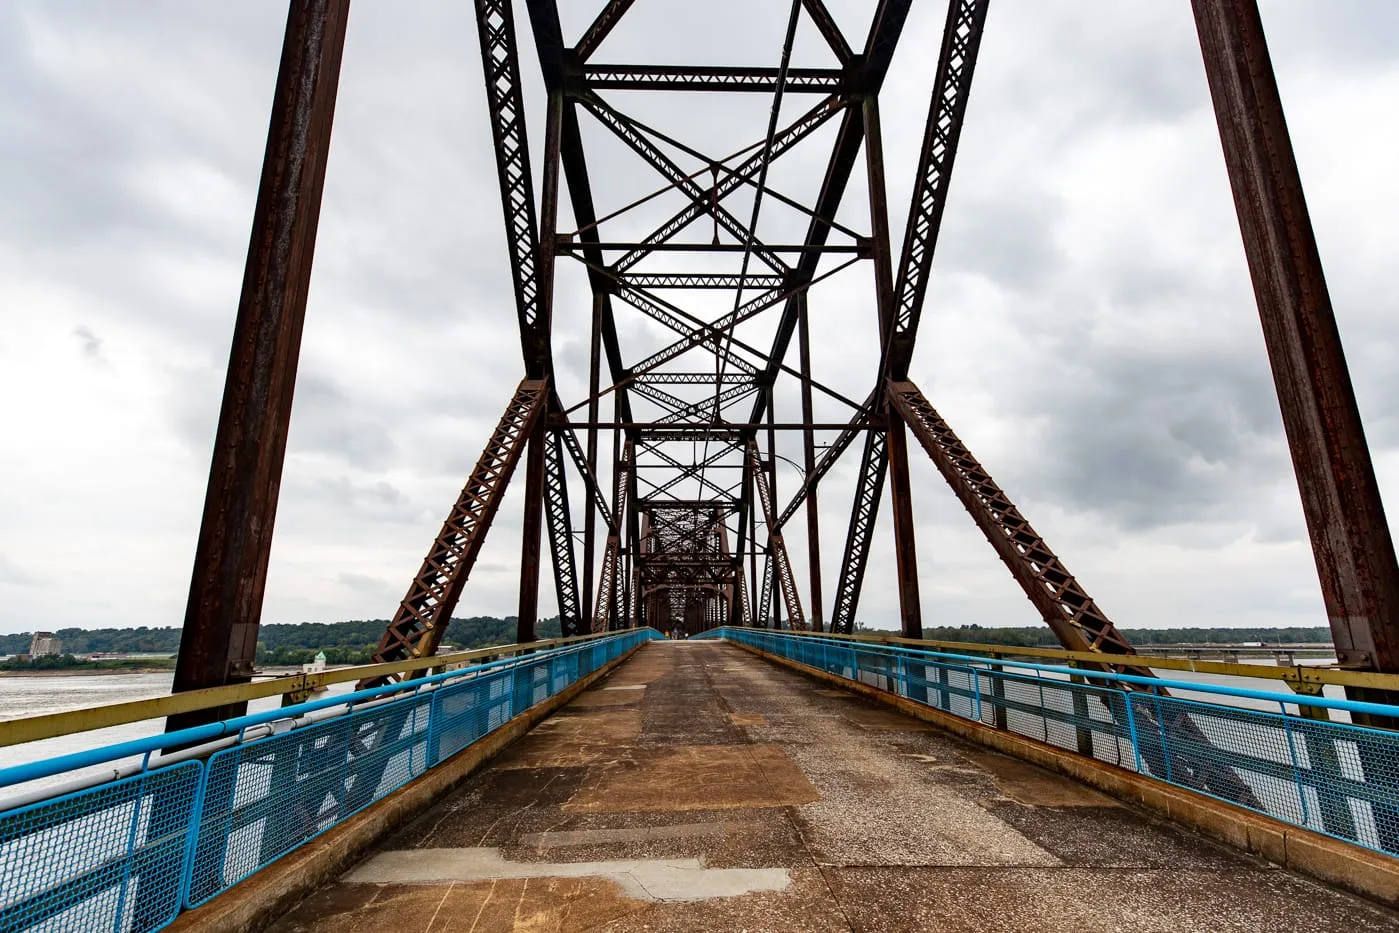 Old Chain of Rocks Bridge in St. Louis, Missouri - a Route 66 roadside attraction